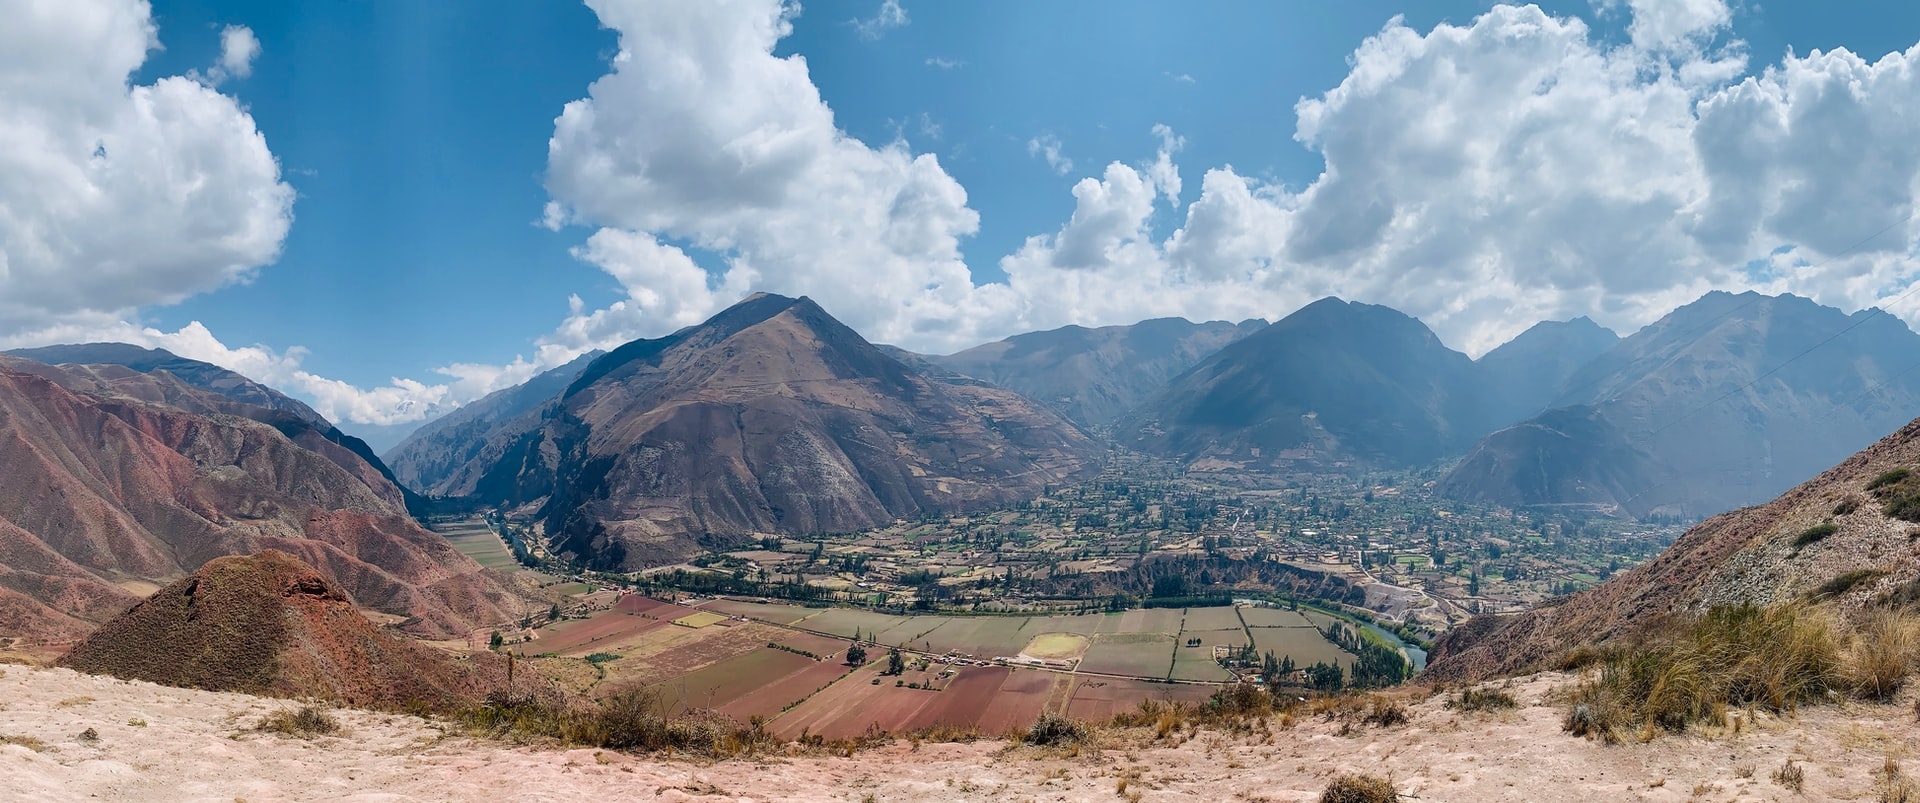 Peru's majestic Sacred Valley